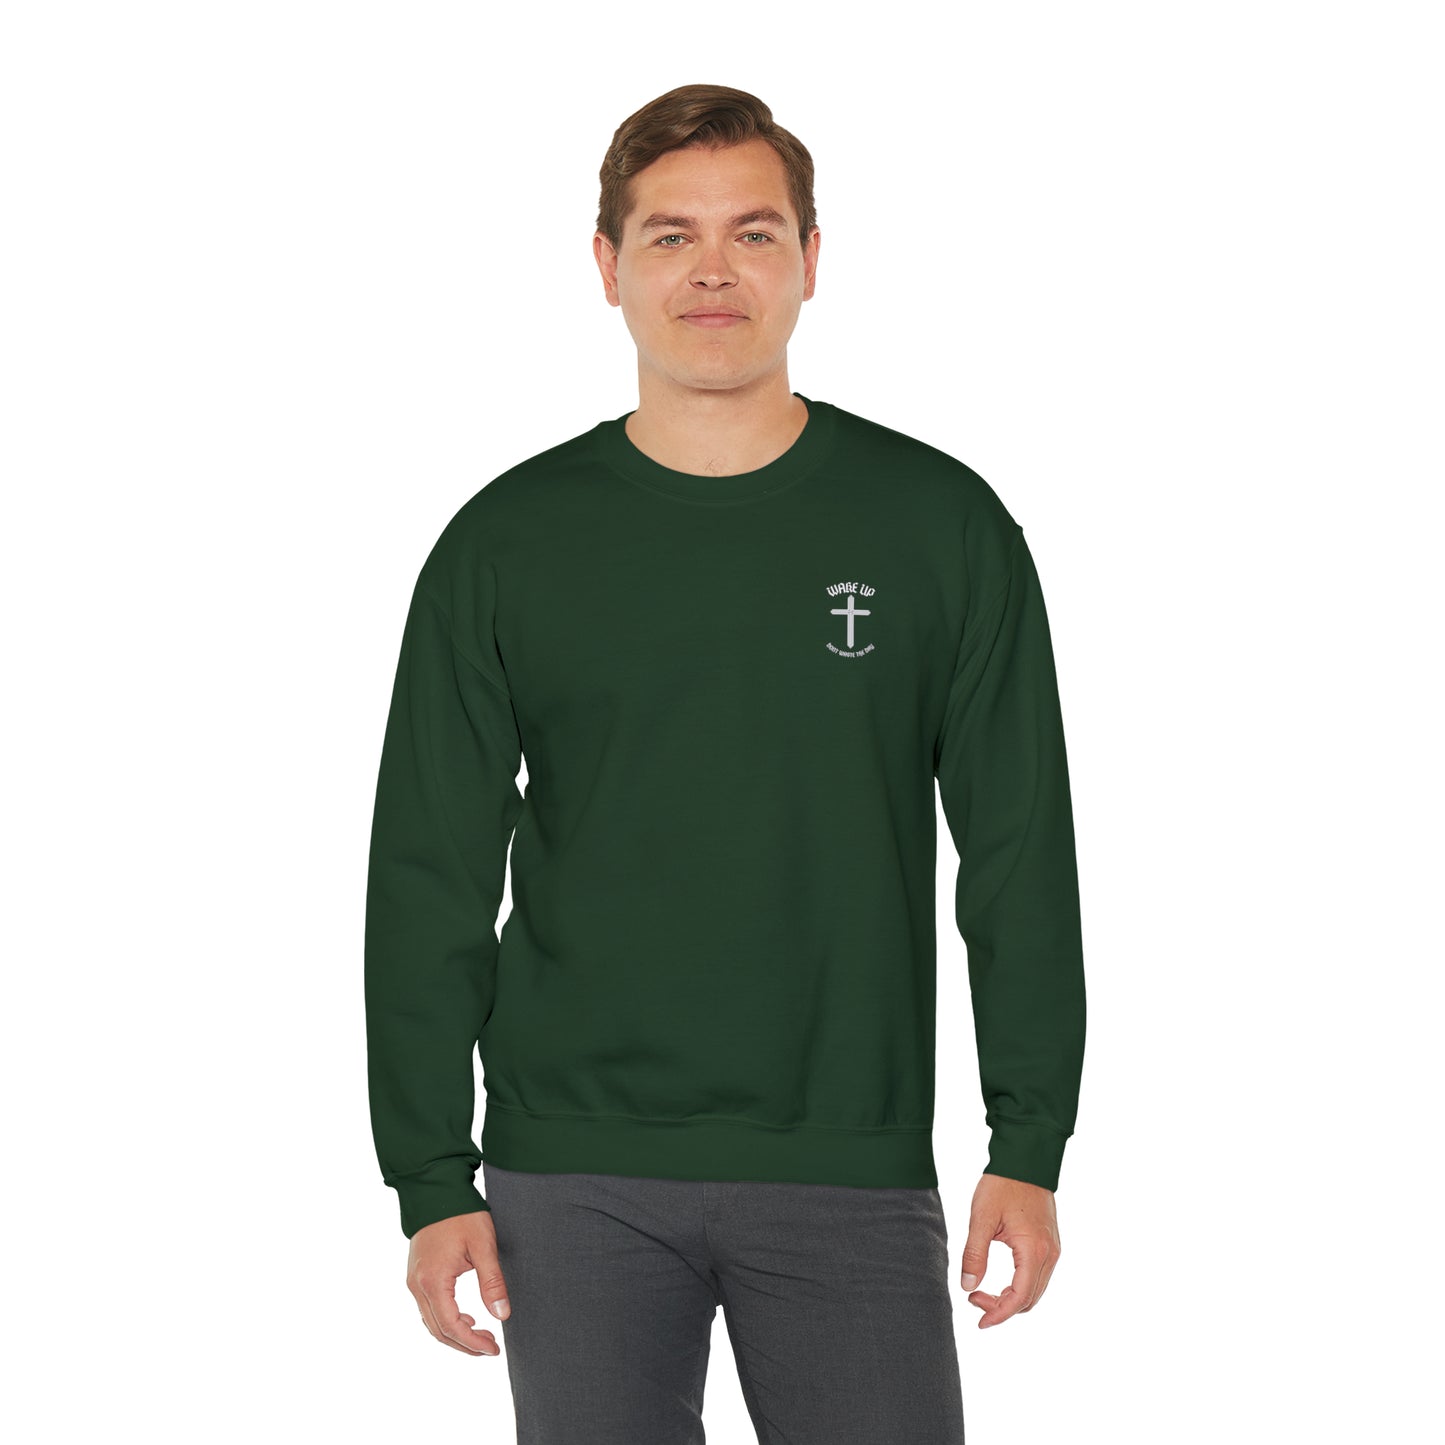 T.W.S.Y.F Crewneck Sweatshirt